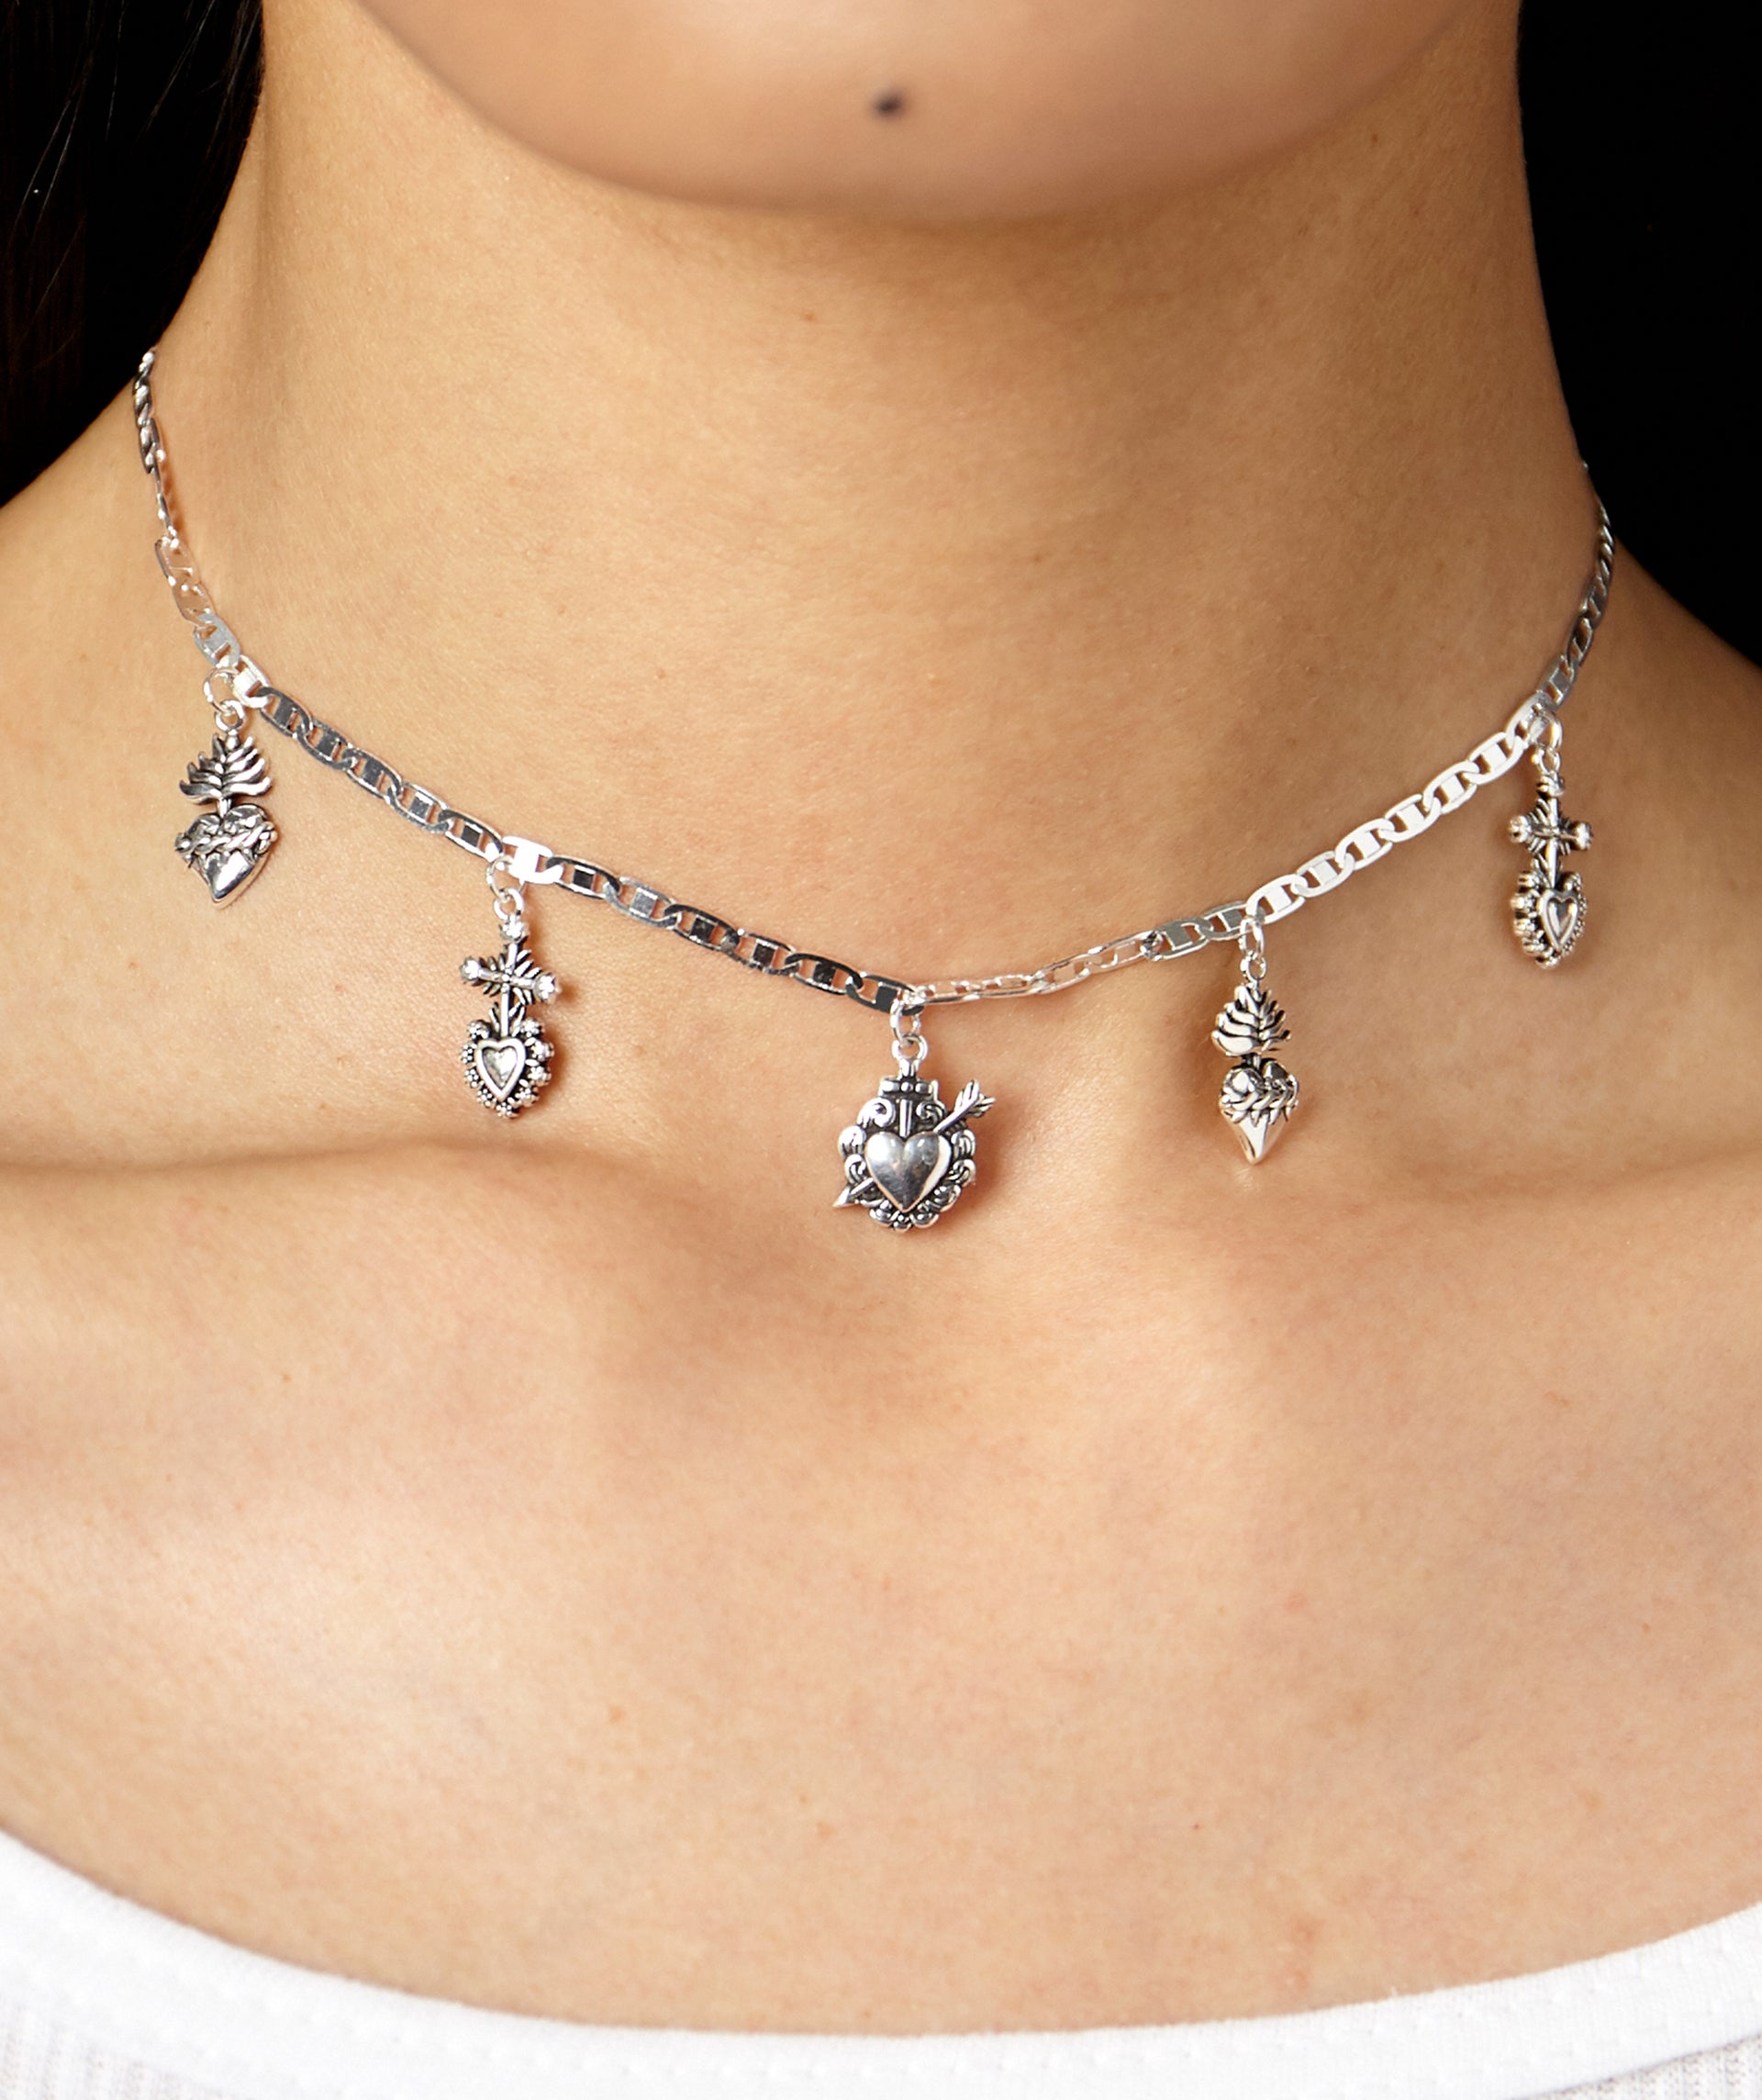  WYBAXZ Necklaces Choker for Women Night Necklace